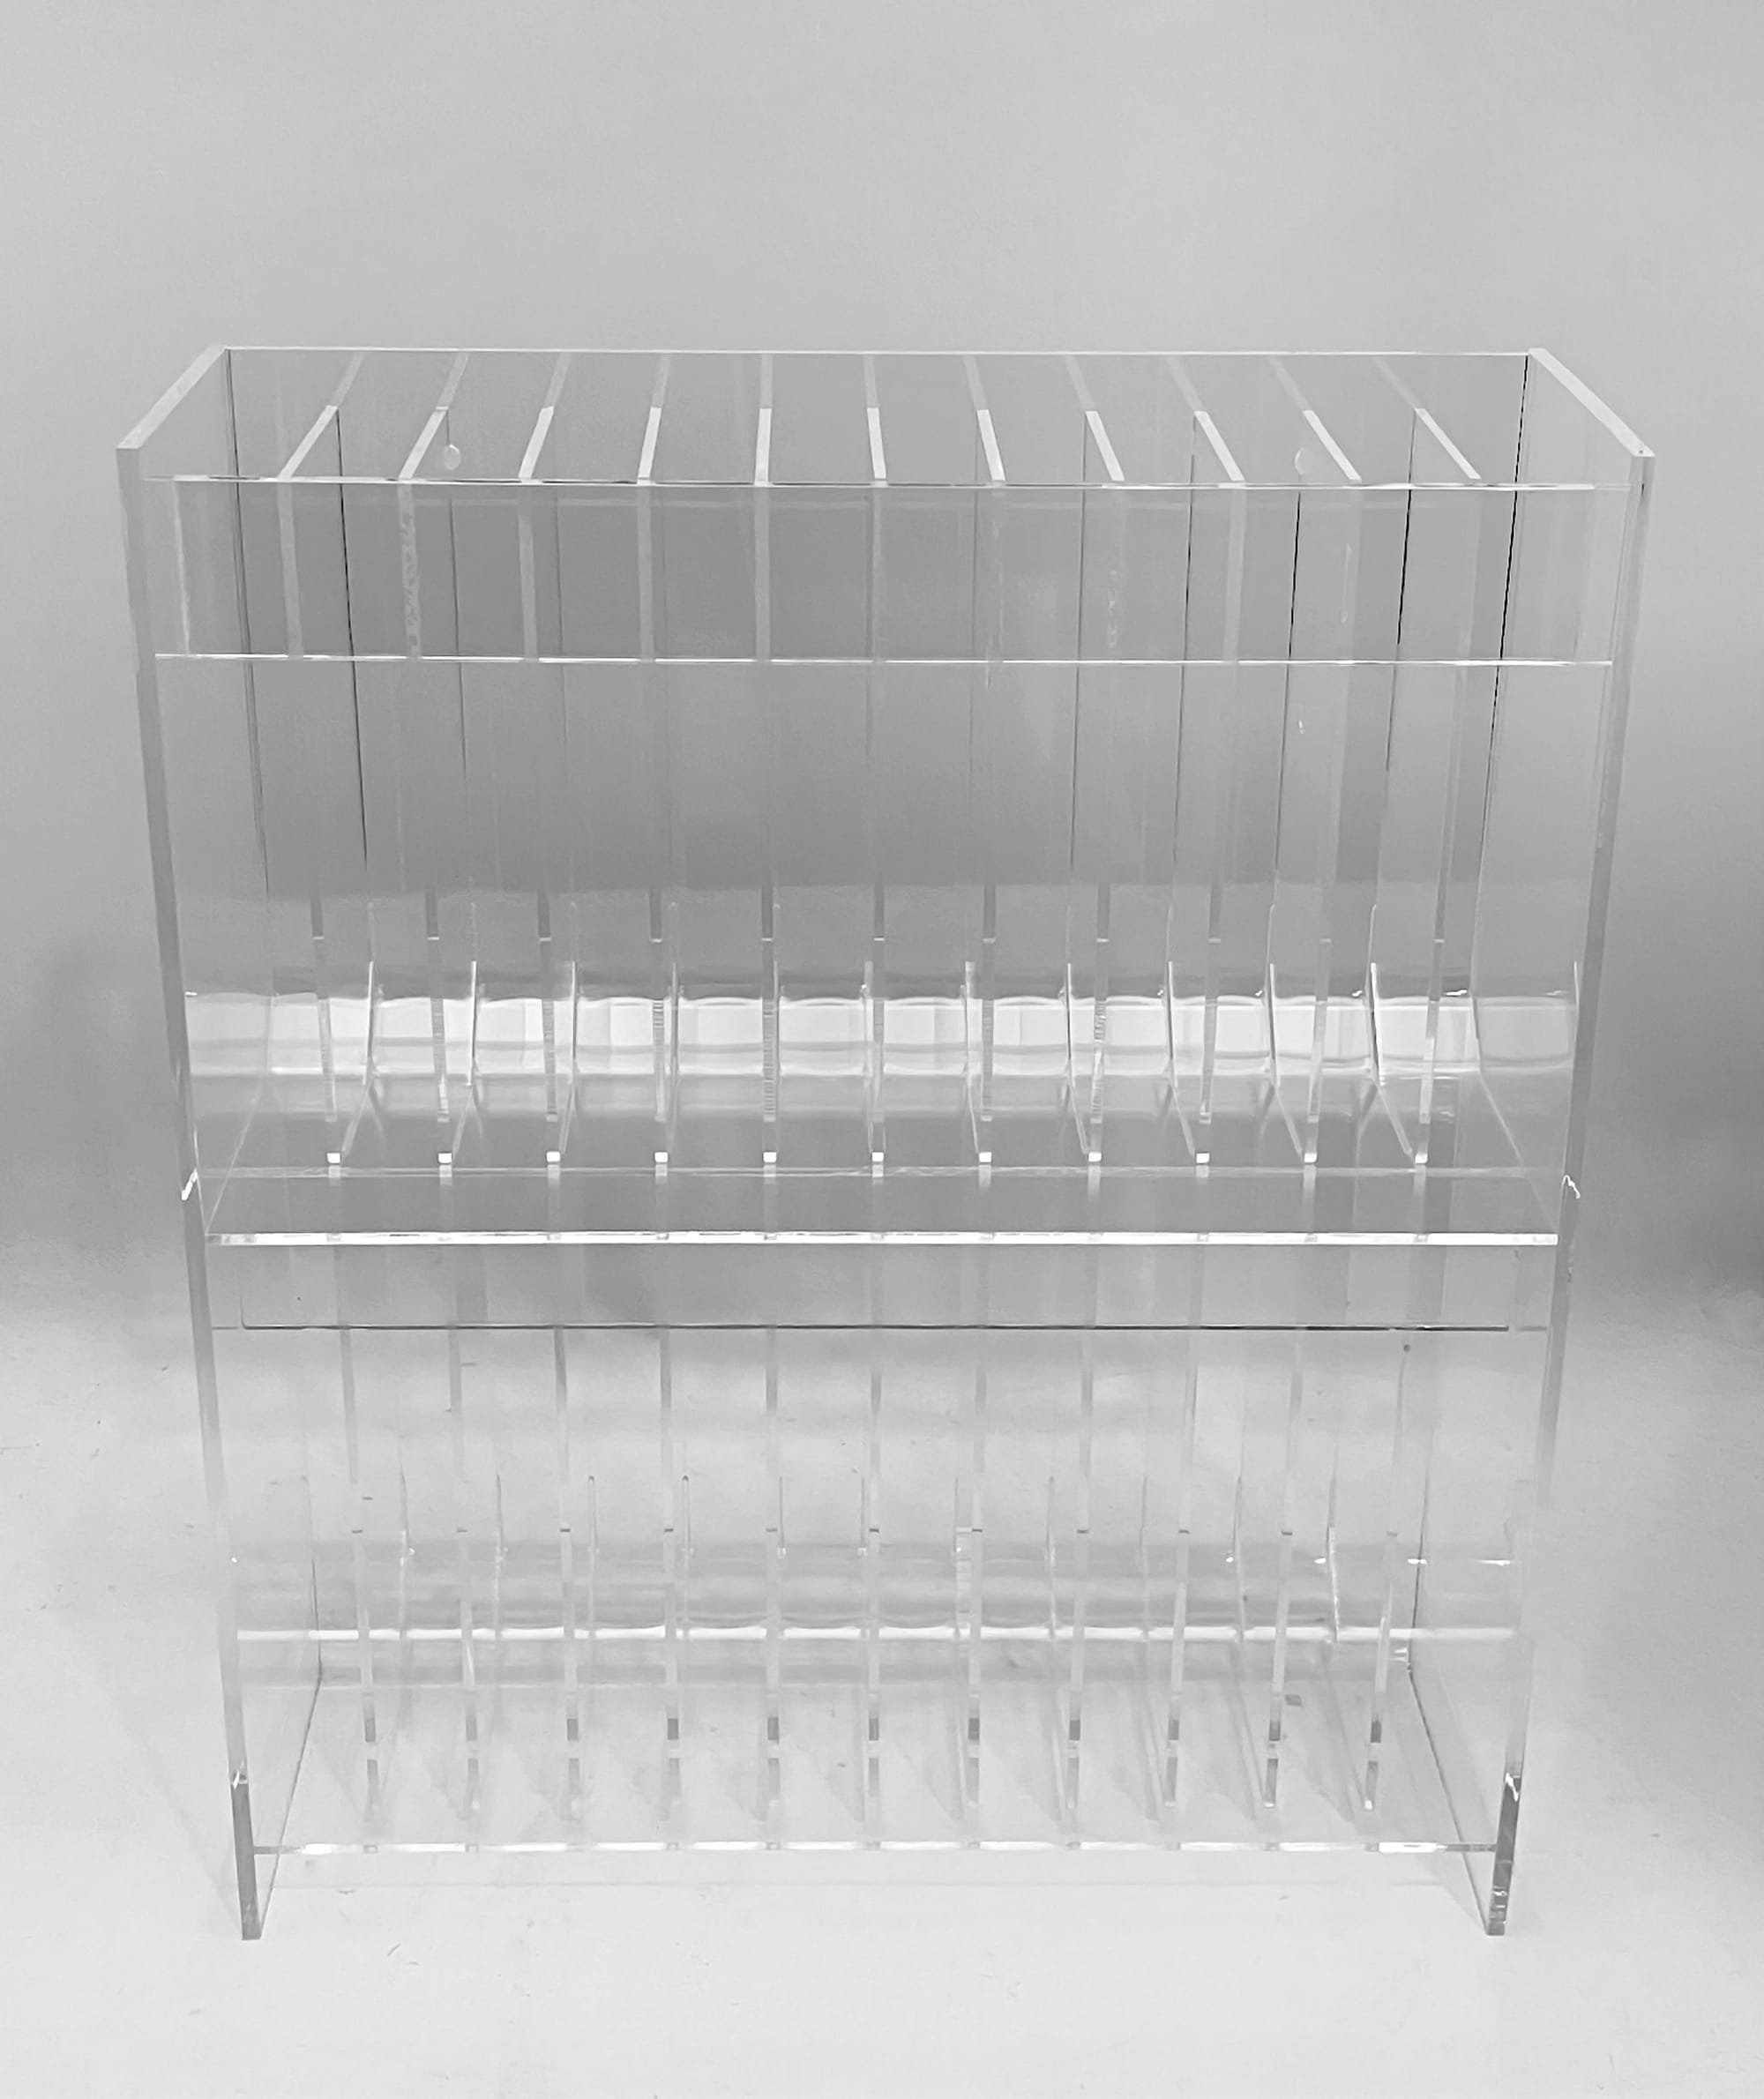 Hinged plexiglass box - CUSTOM ACRYLIC FABRICATION